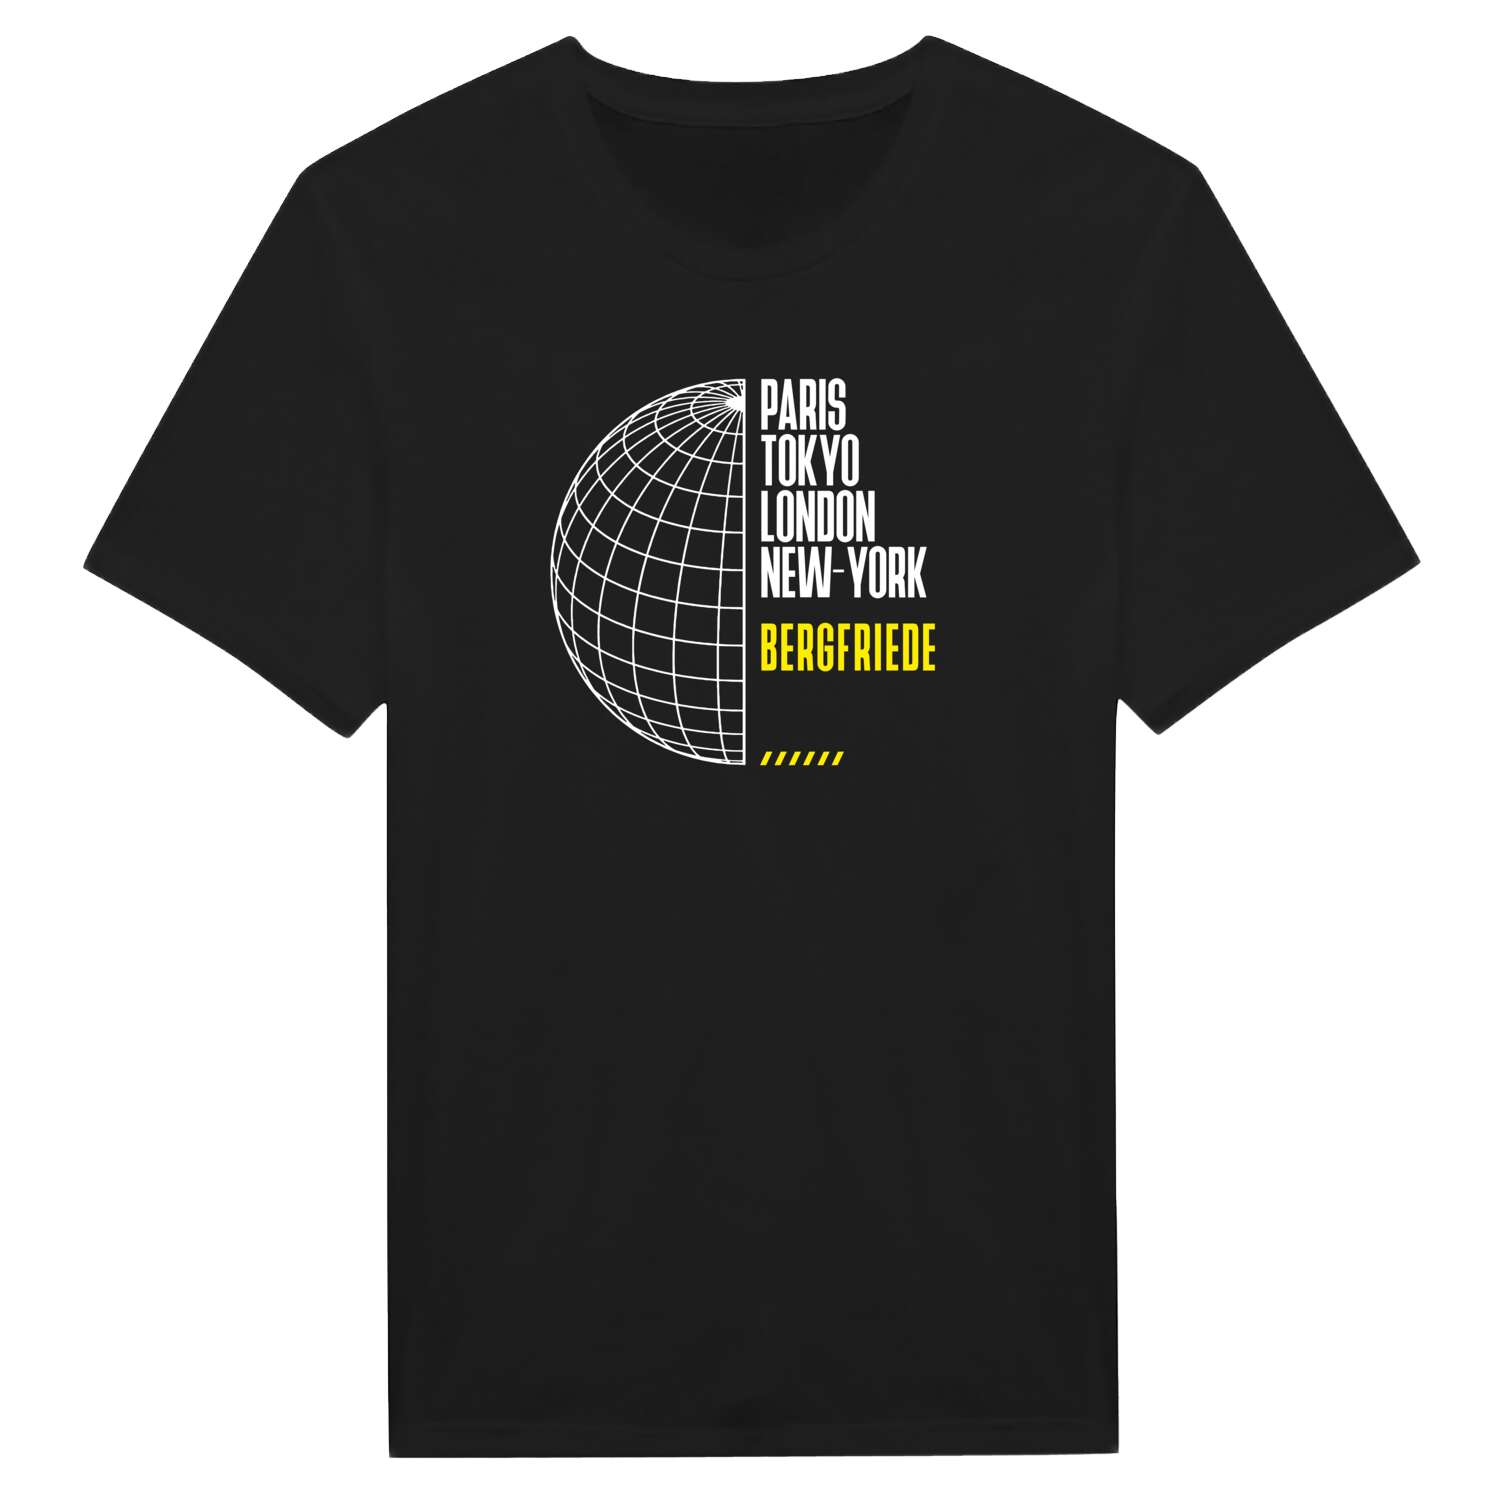 Bergfriede T-Shirt »Paris Tokyo London«